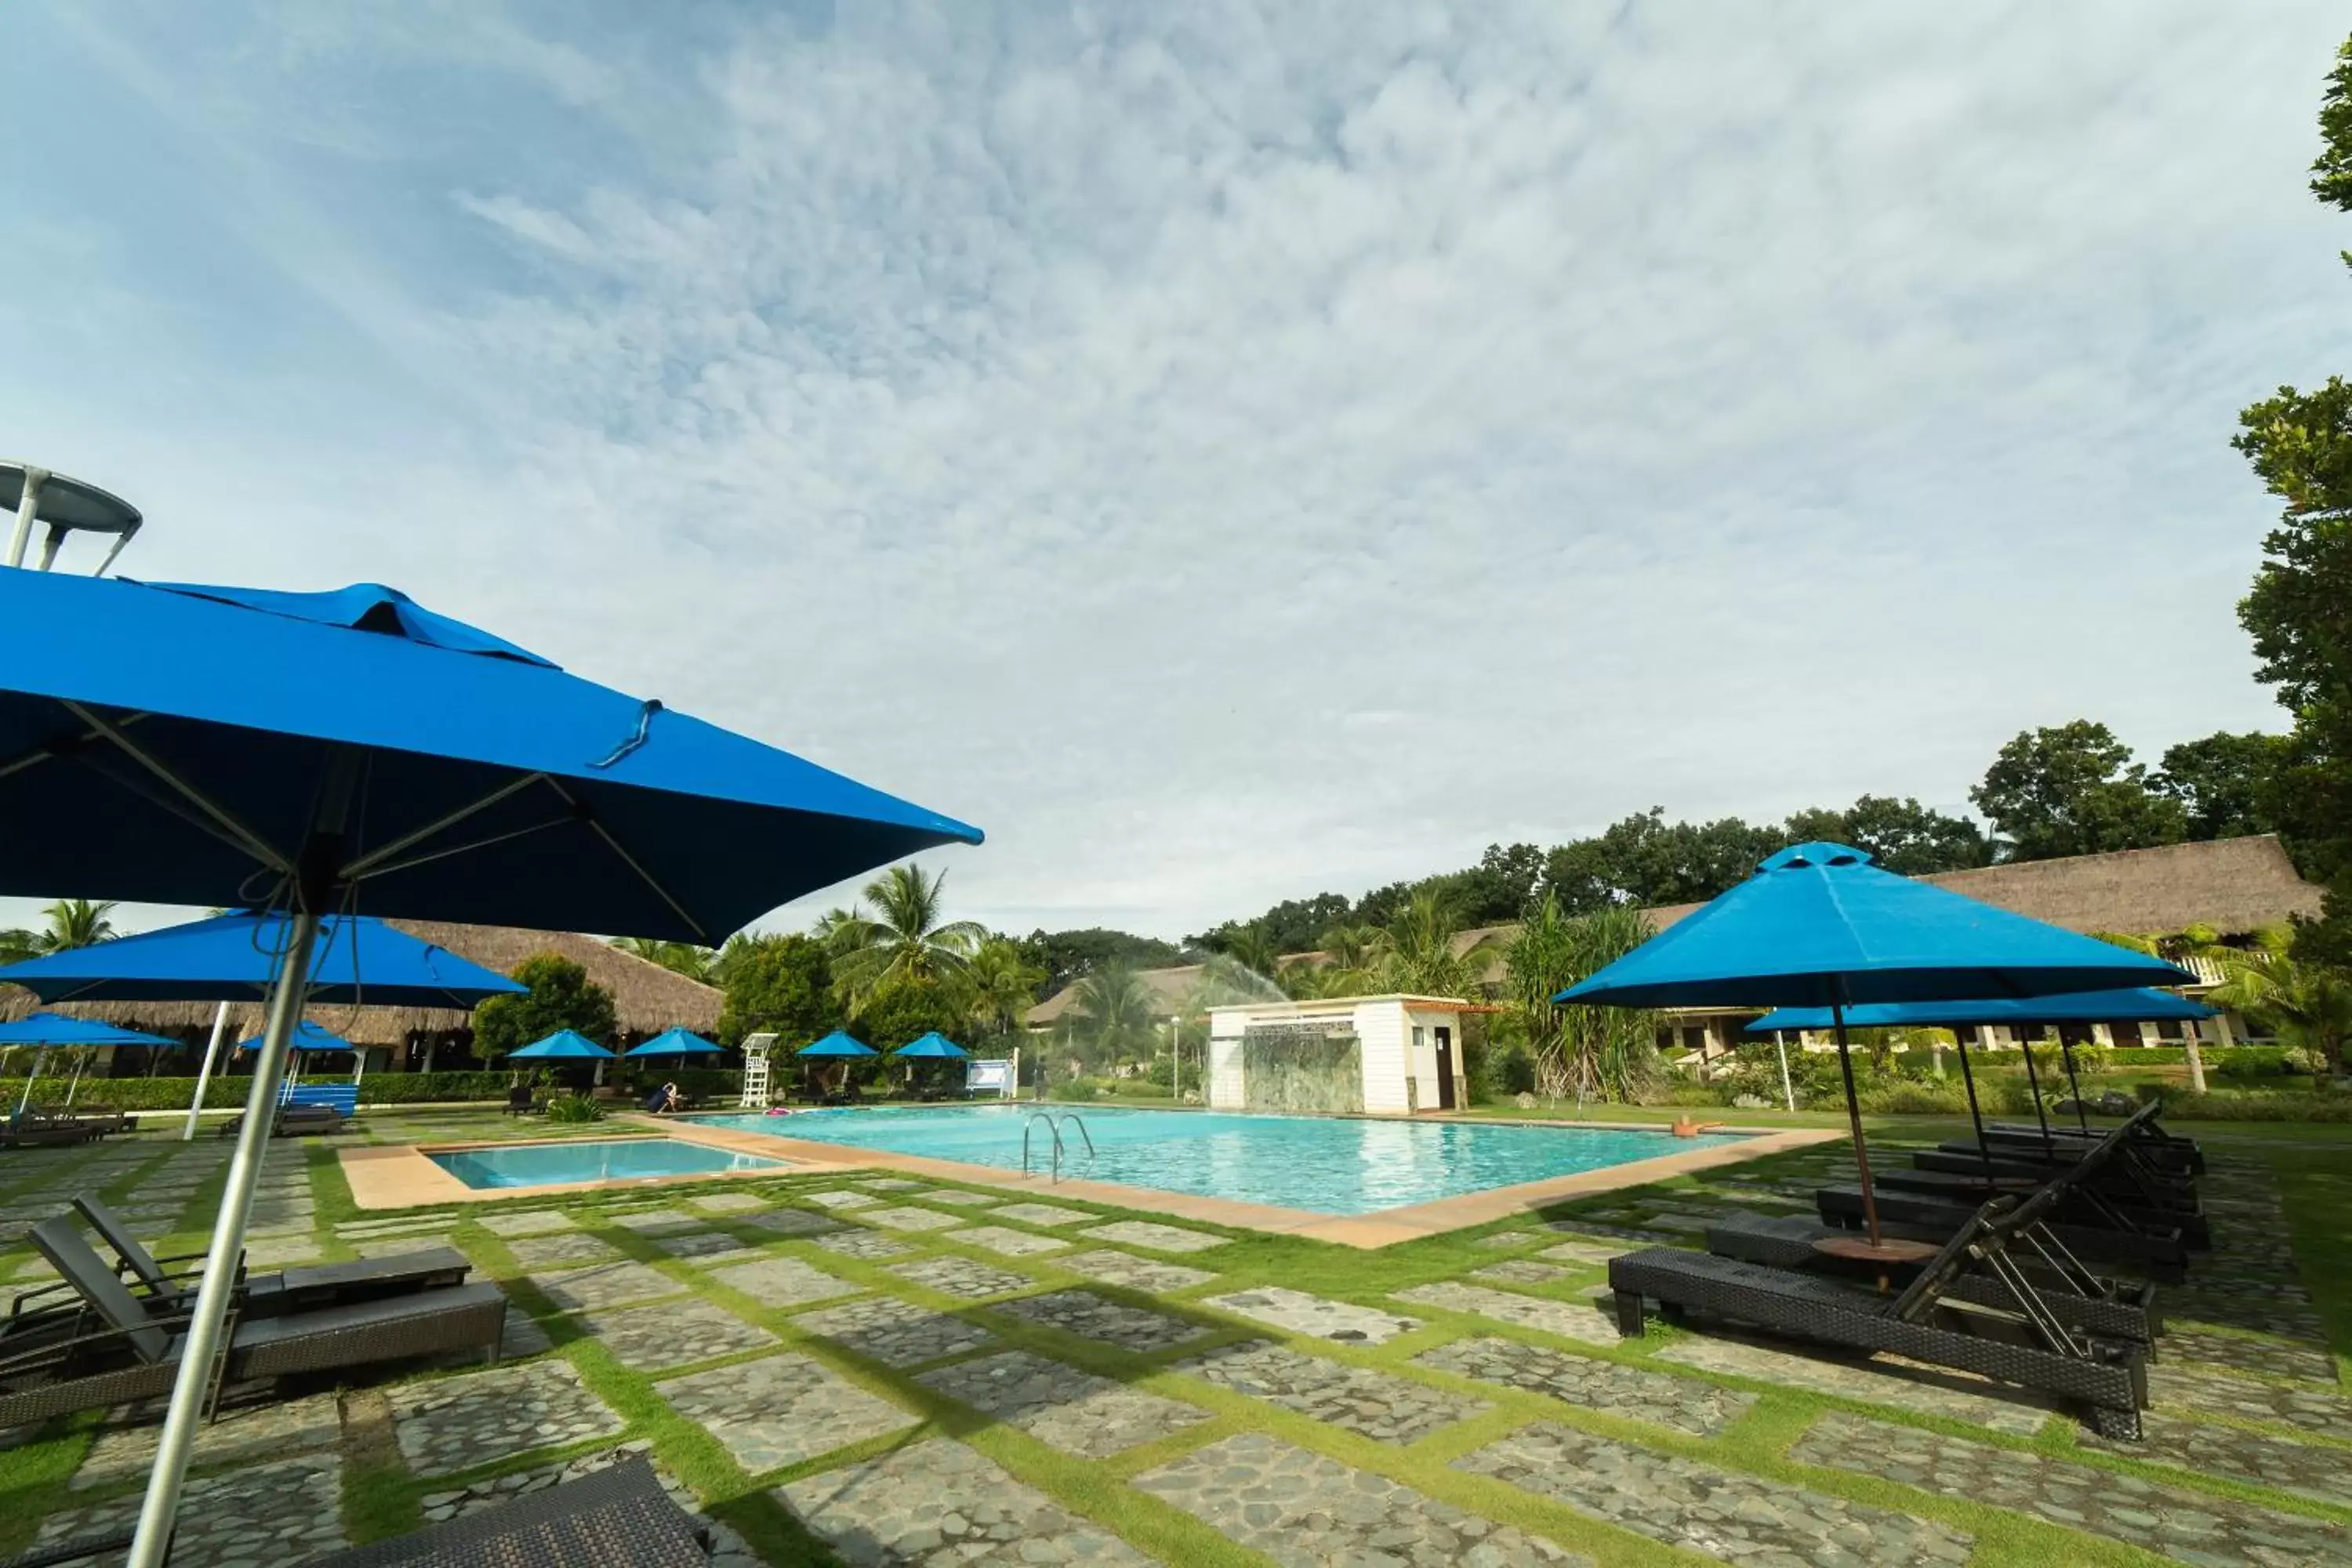 Swimming Pool in Bohol Beach Club